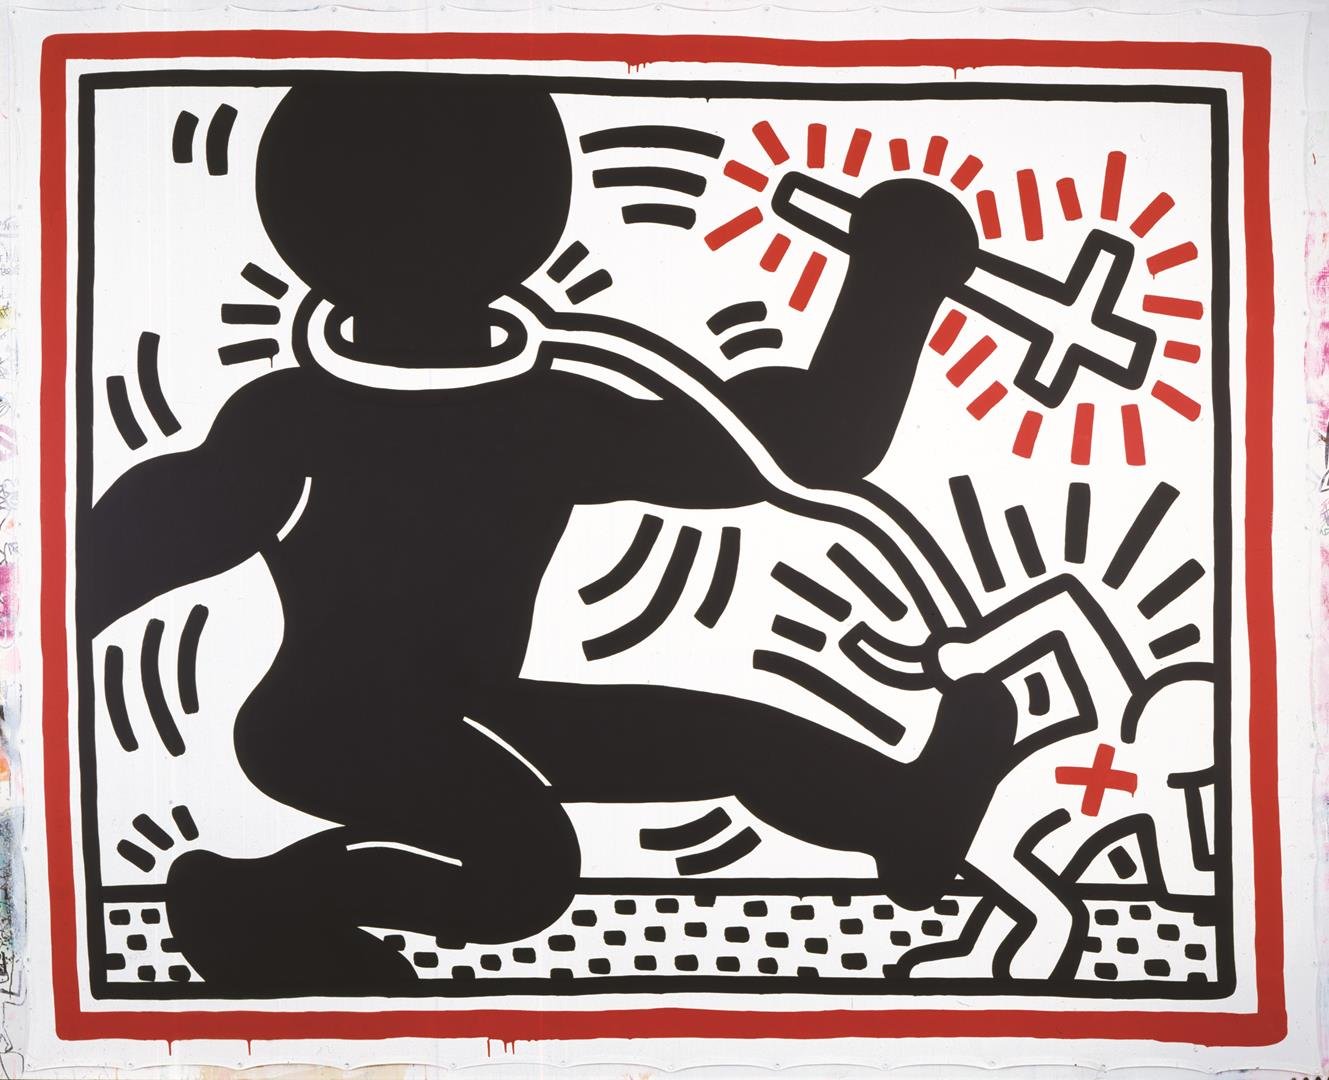 04_Keith Haring_Untitled_1984©Keith Haring Foundation-LR.jpg